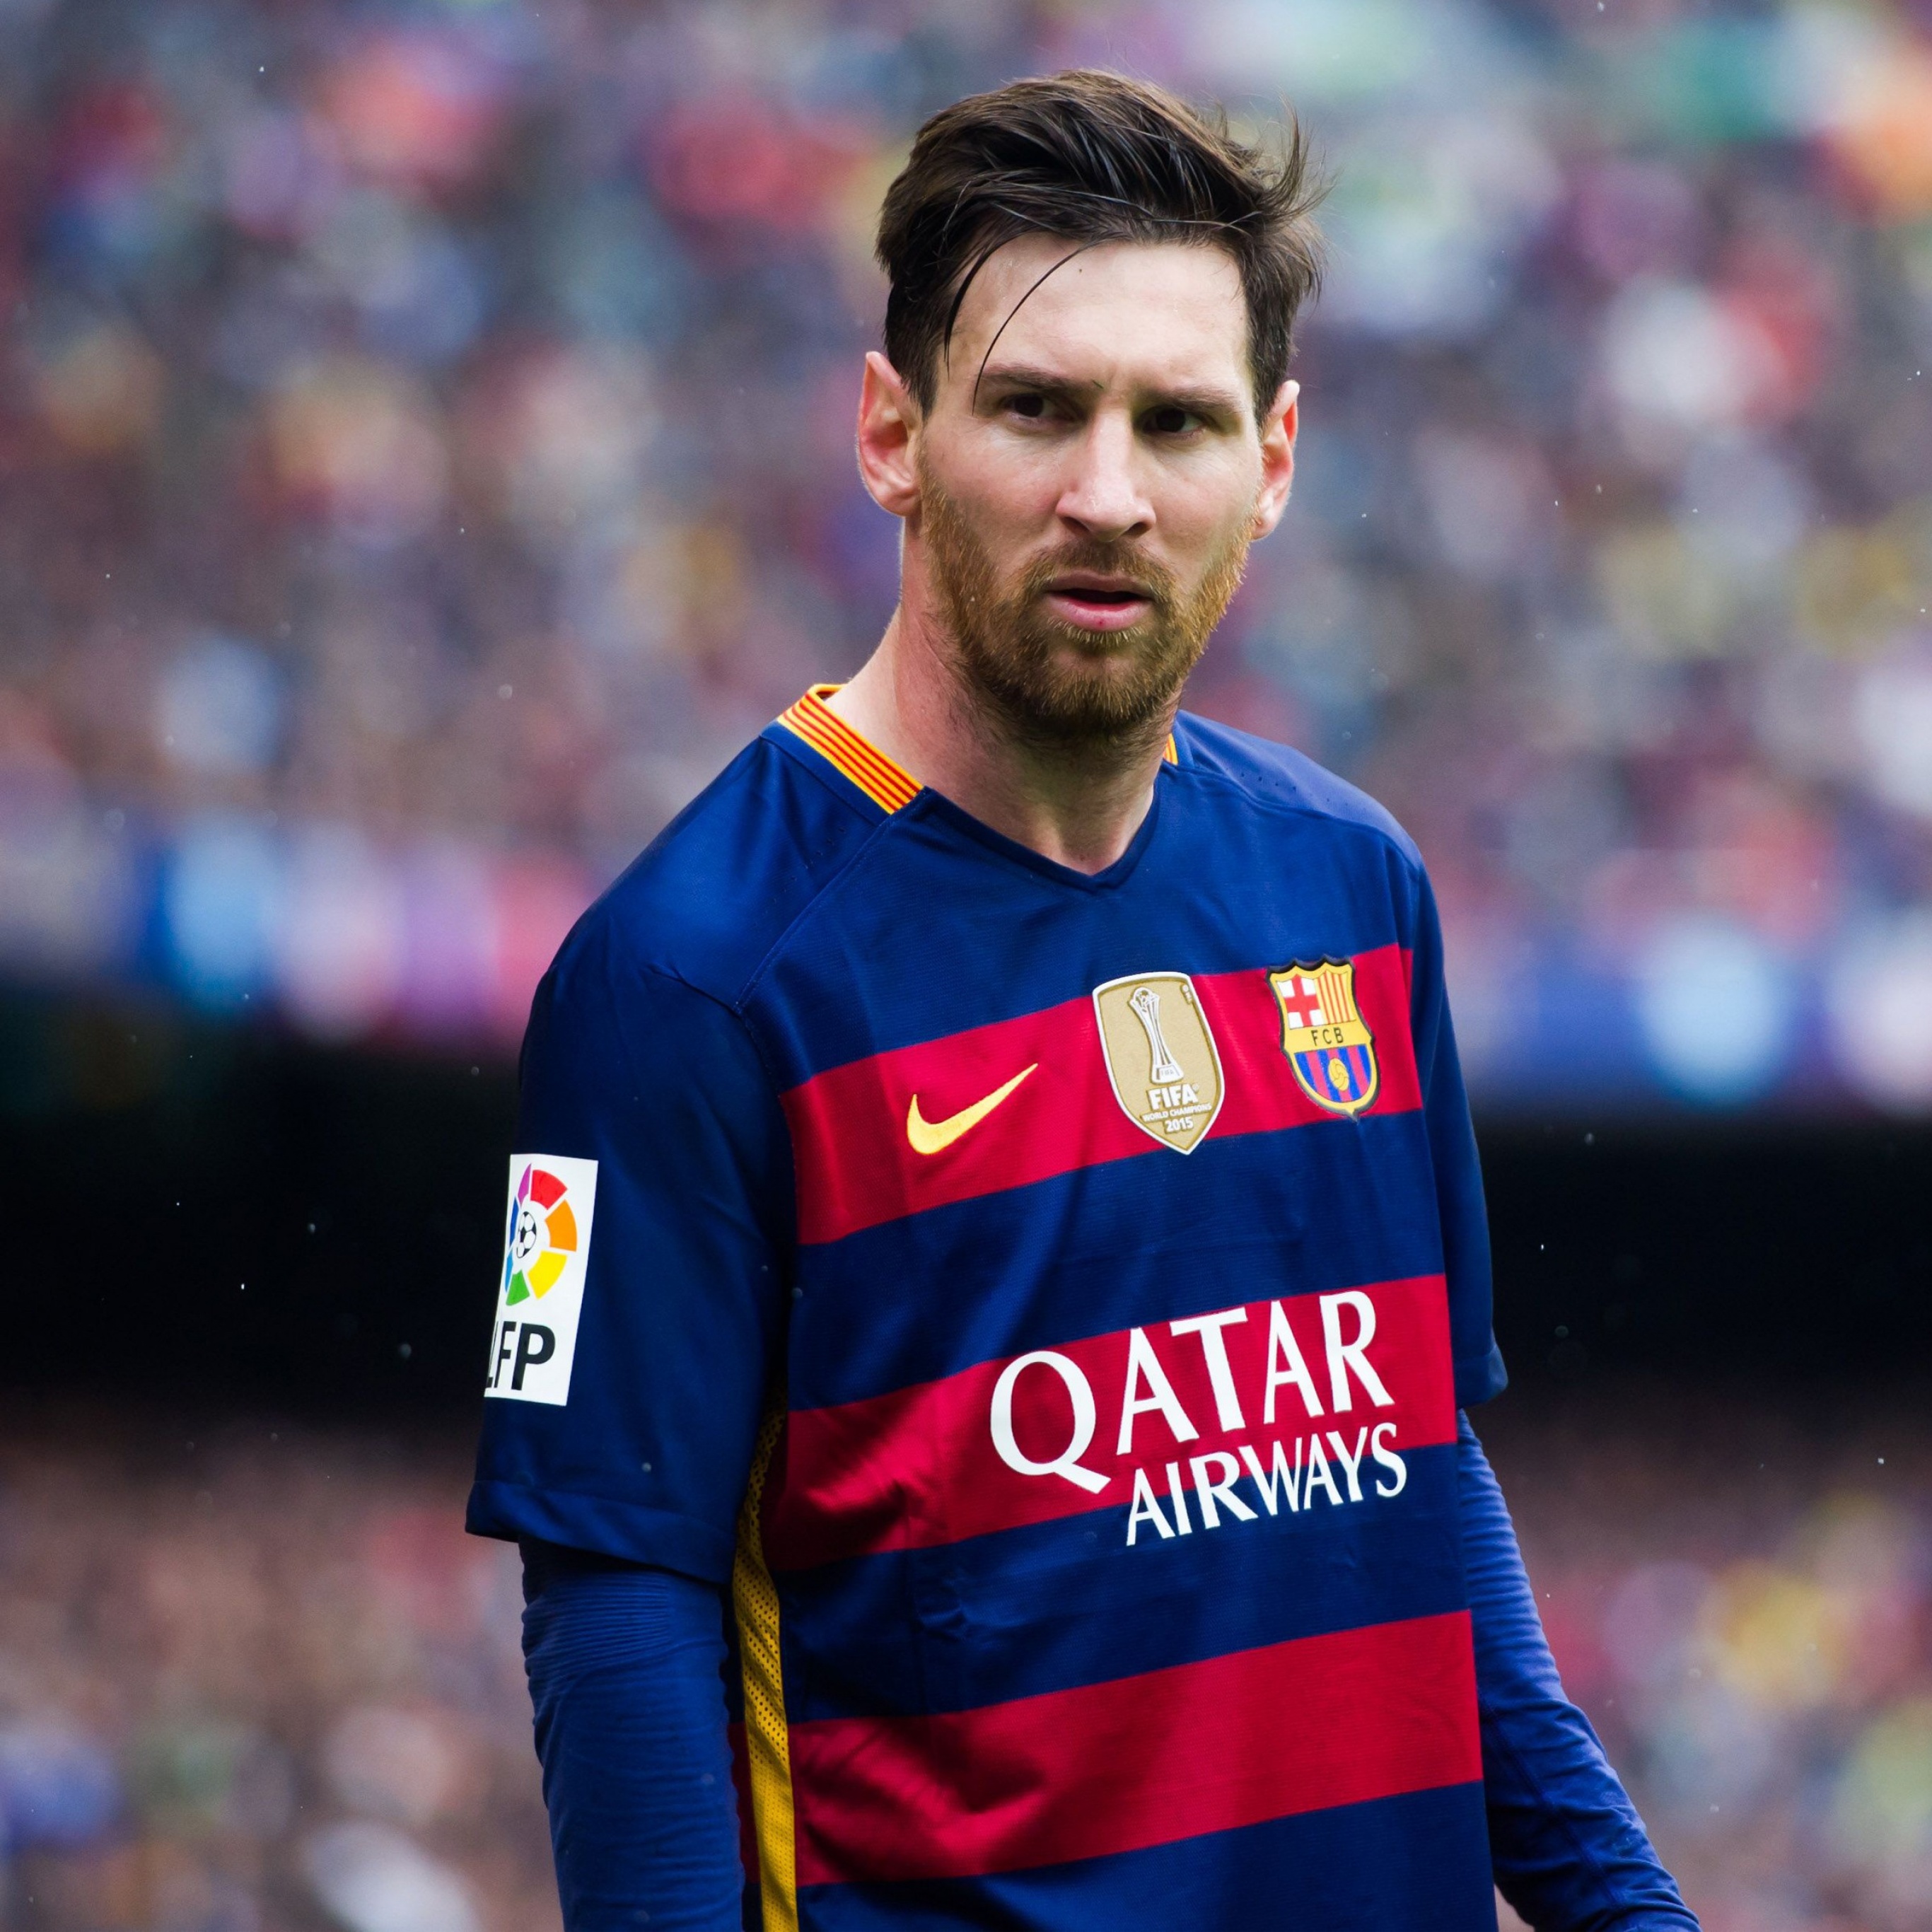 Lionel Messi Wallpaper 4K, Football player, Sports